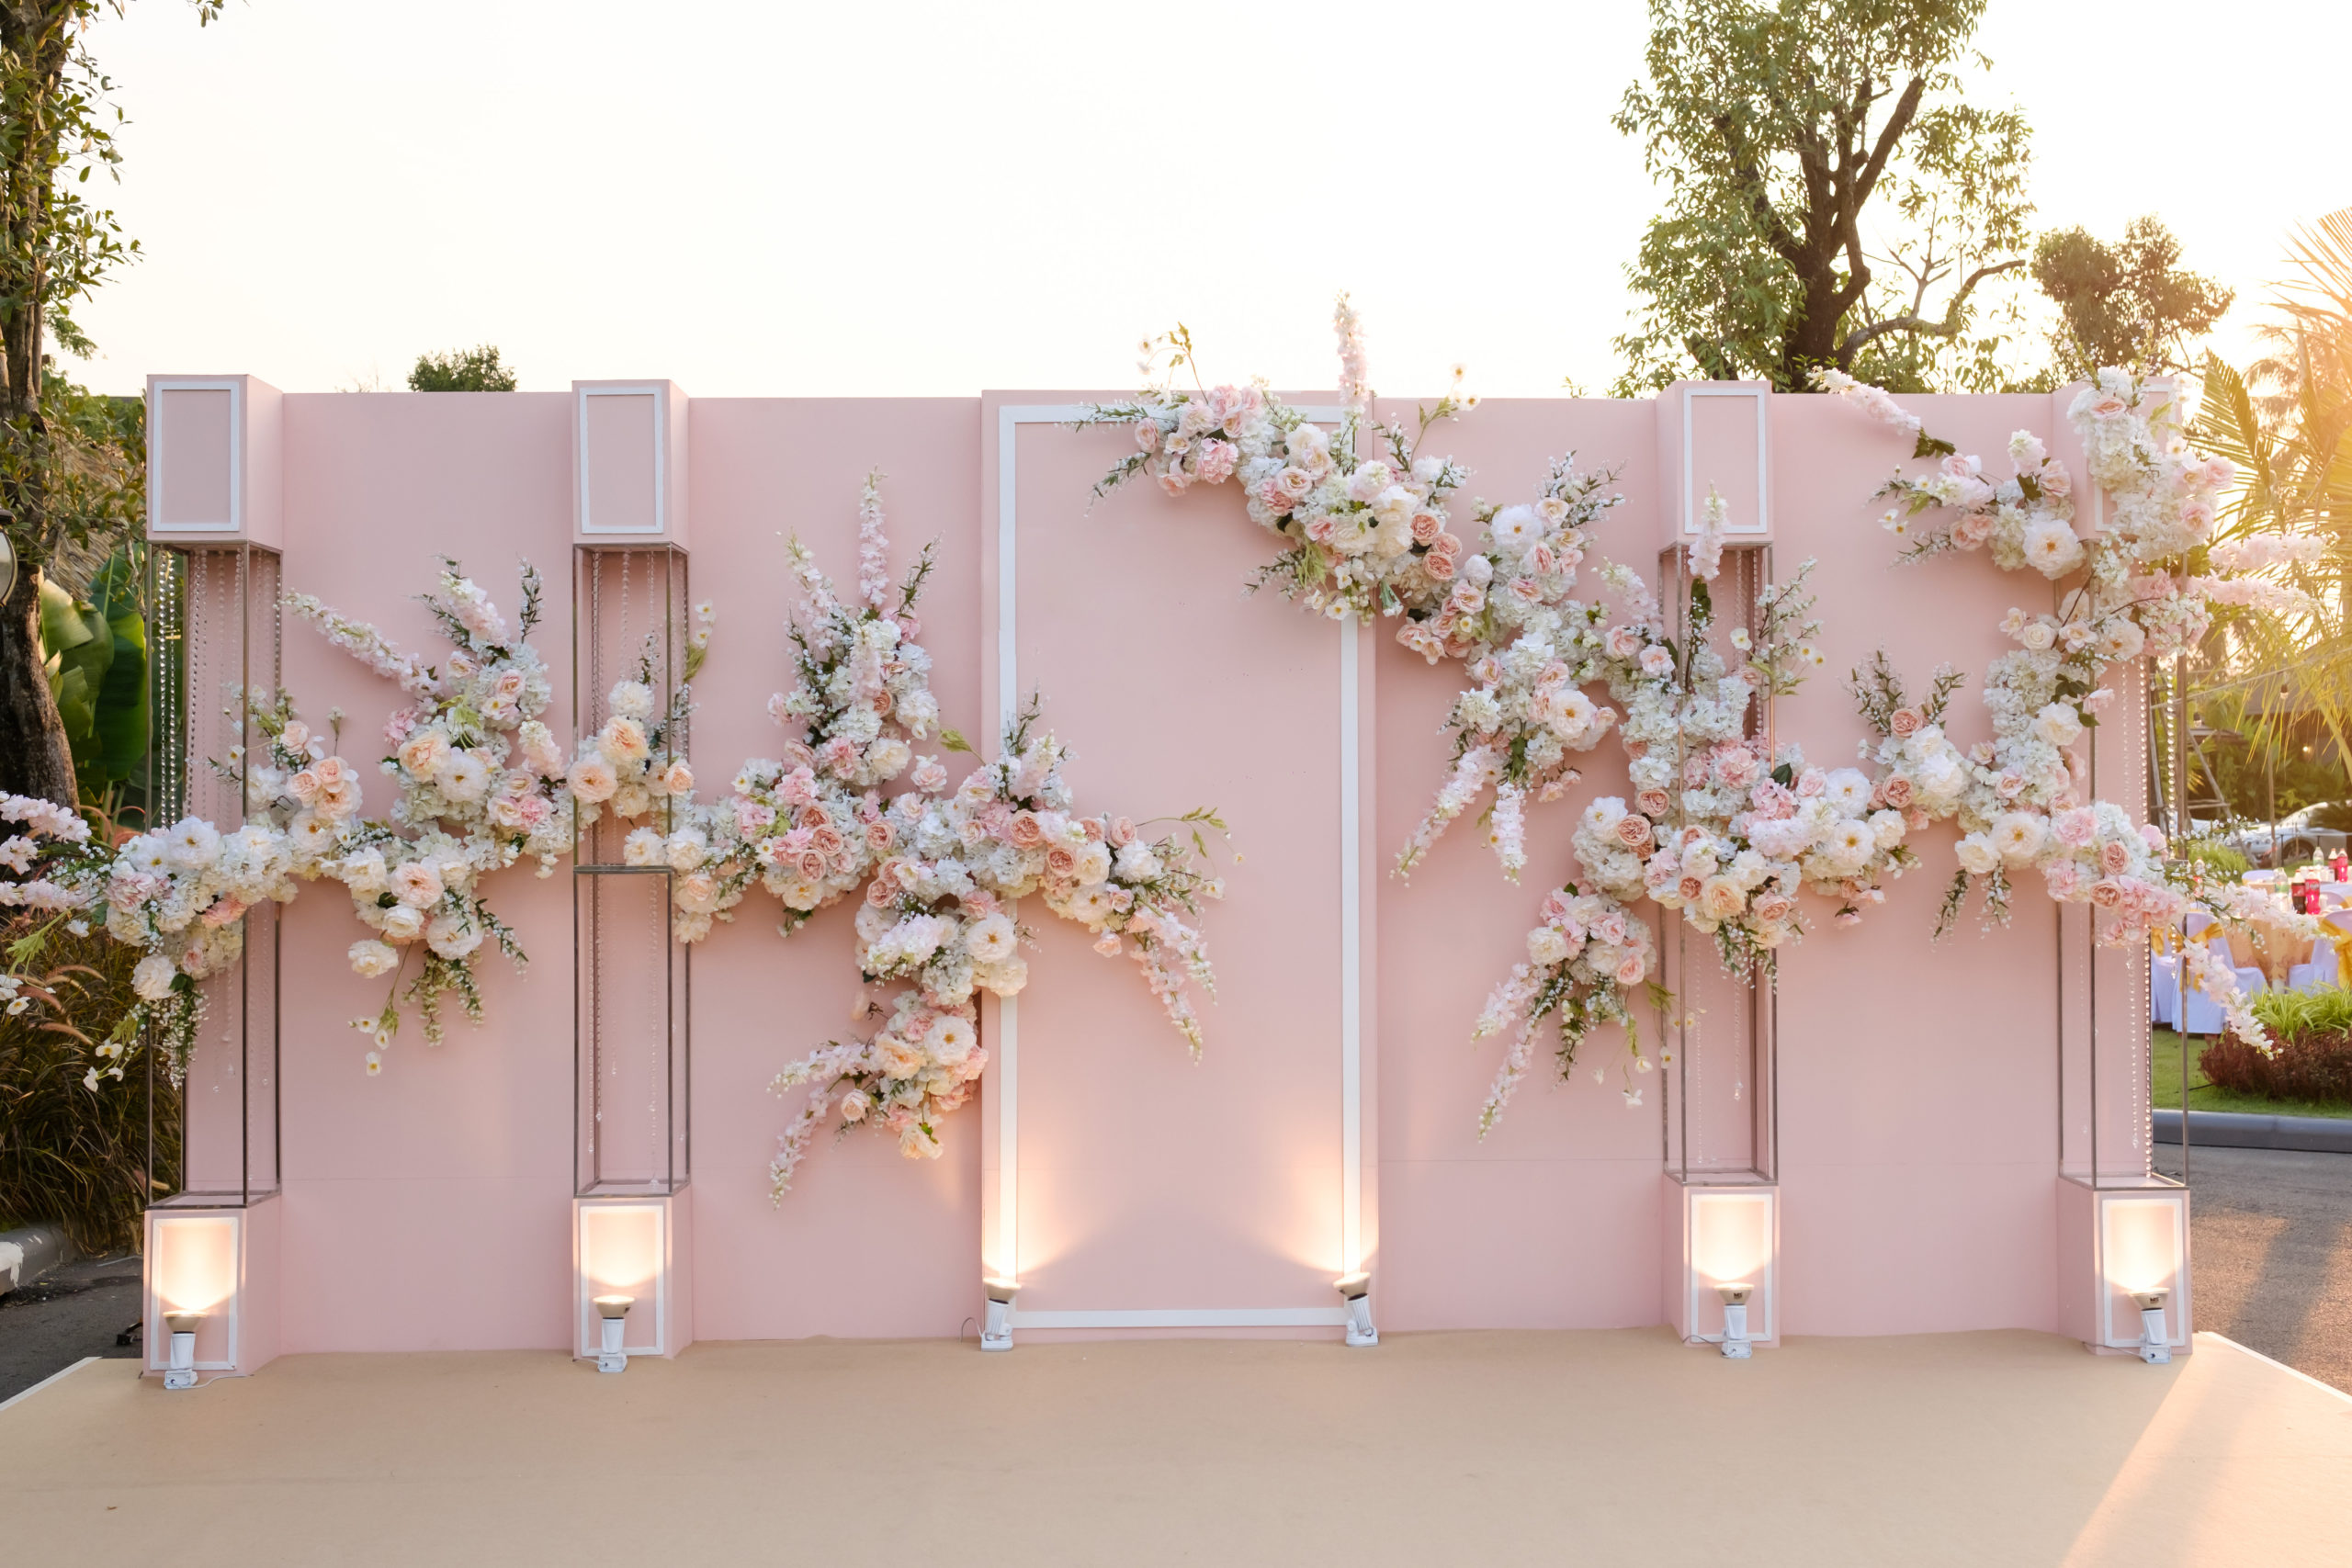 Custom Backdrop Stand For Wedding And Other Events - Mak Floral Design  Design